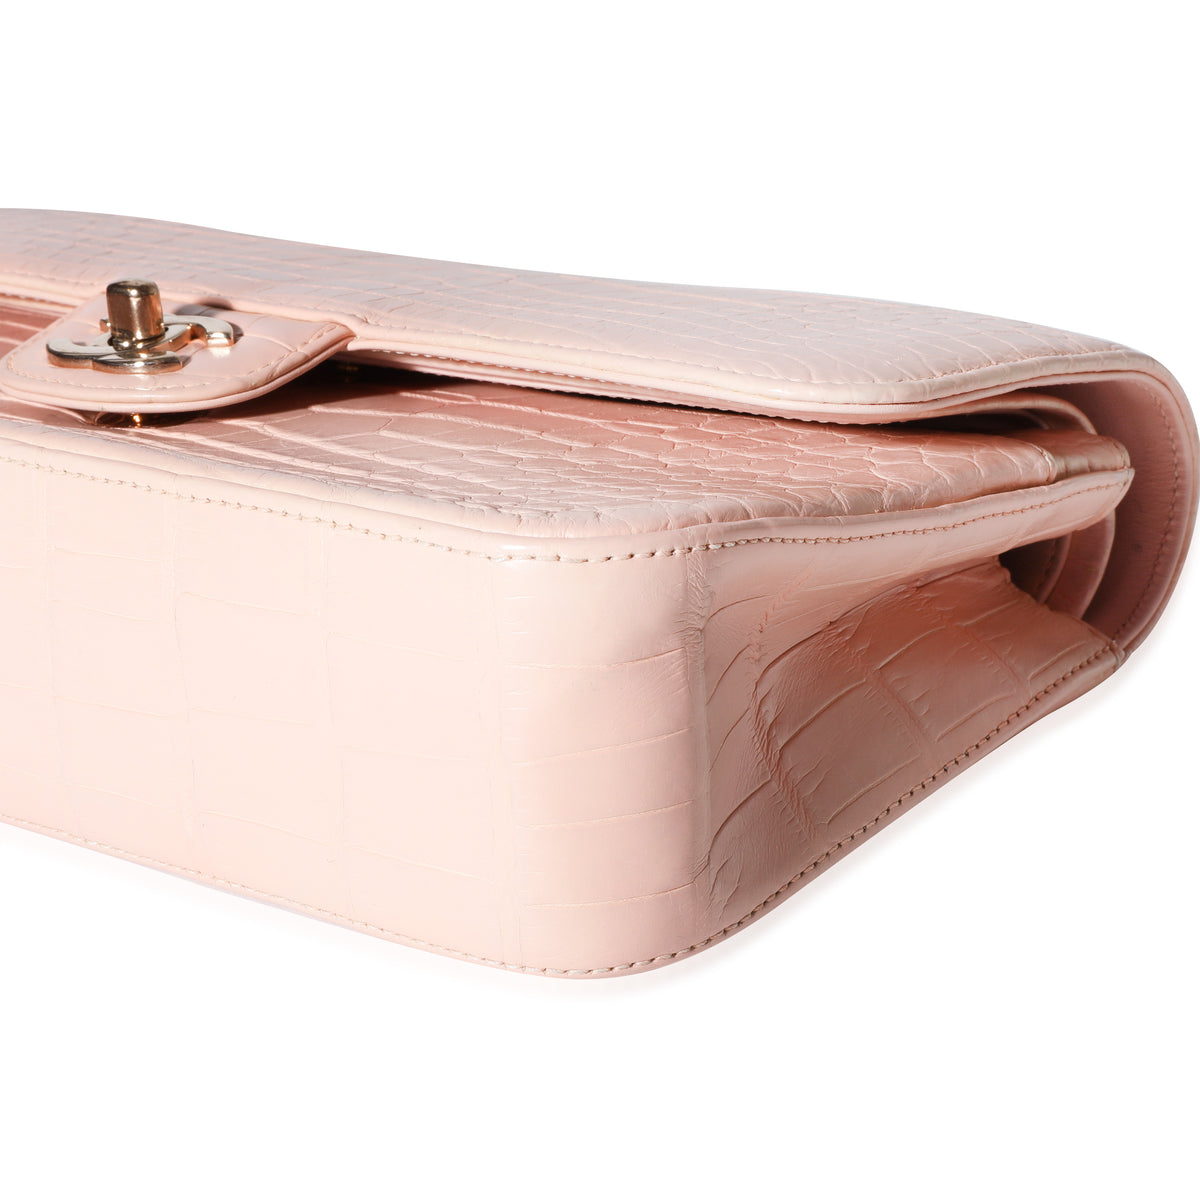 Chanel Alligator Medium Classic Double Flap Bag - Pink Shoulder